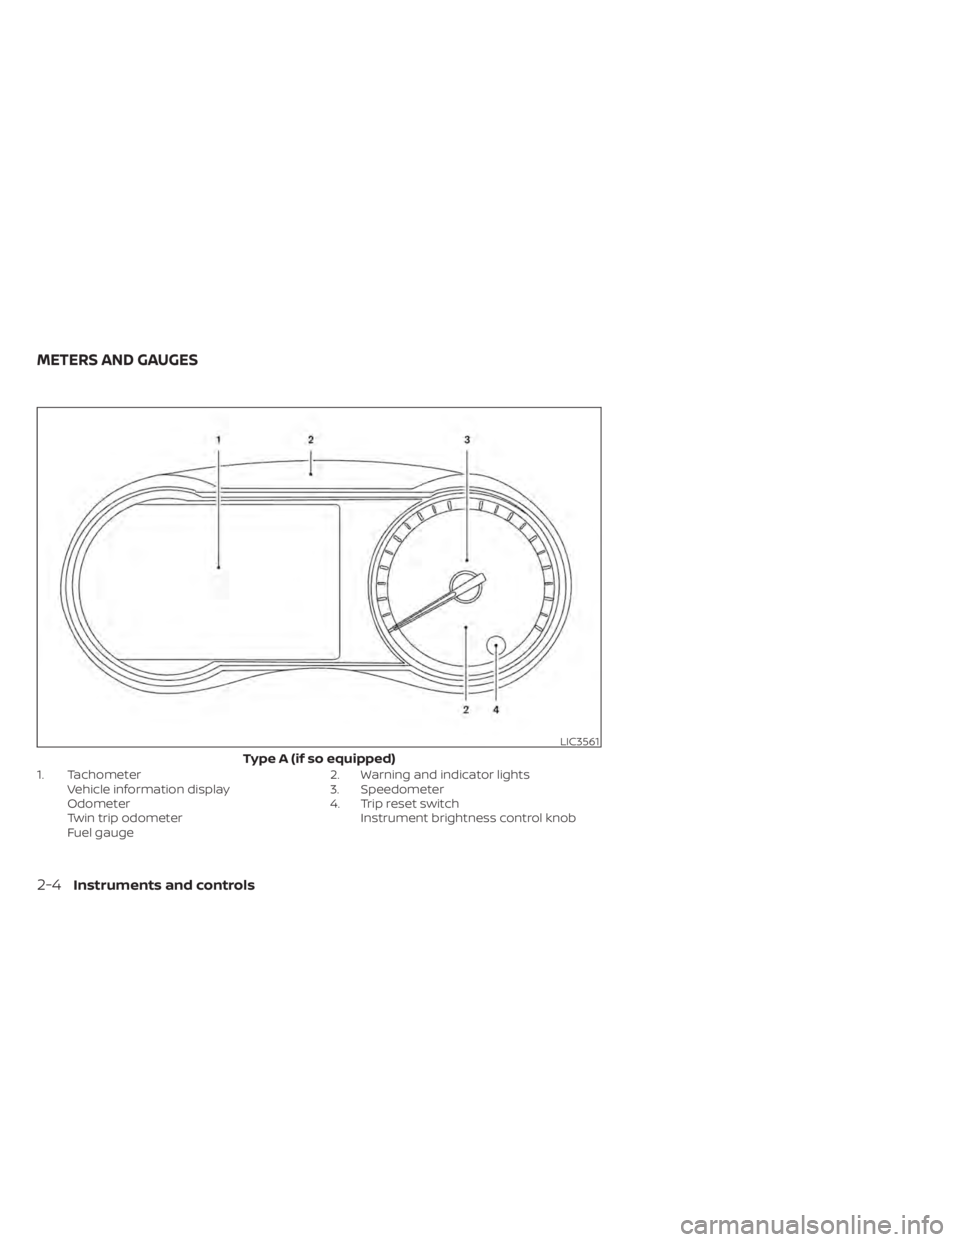 NISSAN KICKS 2020  Owner´s Manual 1. TachometerVehicle information display
Odometer
Twin trip odometer
Fuel gauge 2. Warning and indicator lights
3. Speedometer
4. Trip reset switch
Instrument brightness control knob
LIC3561
Type A (i